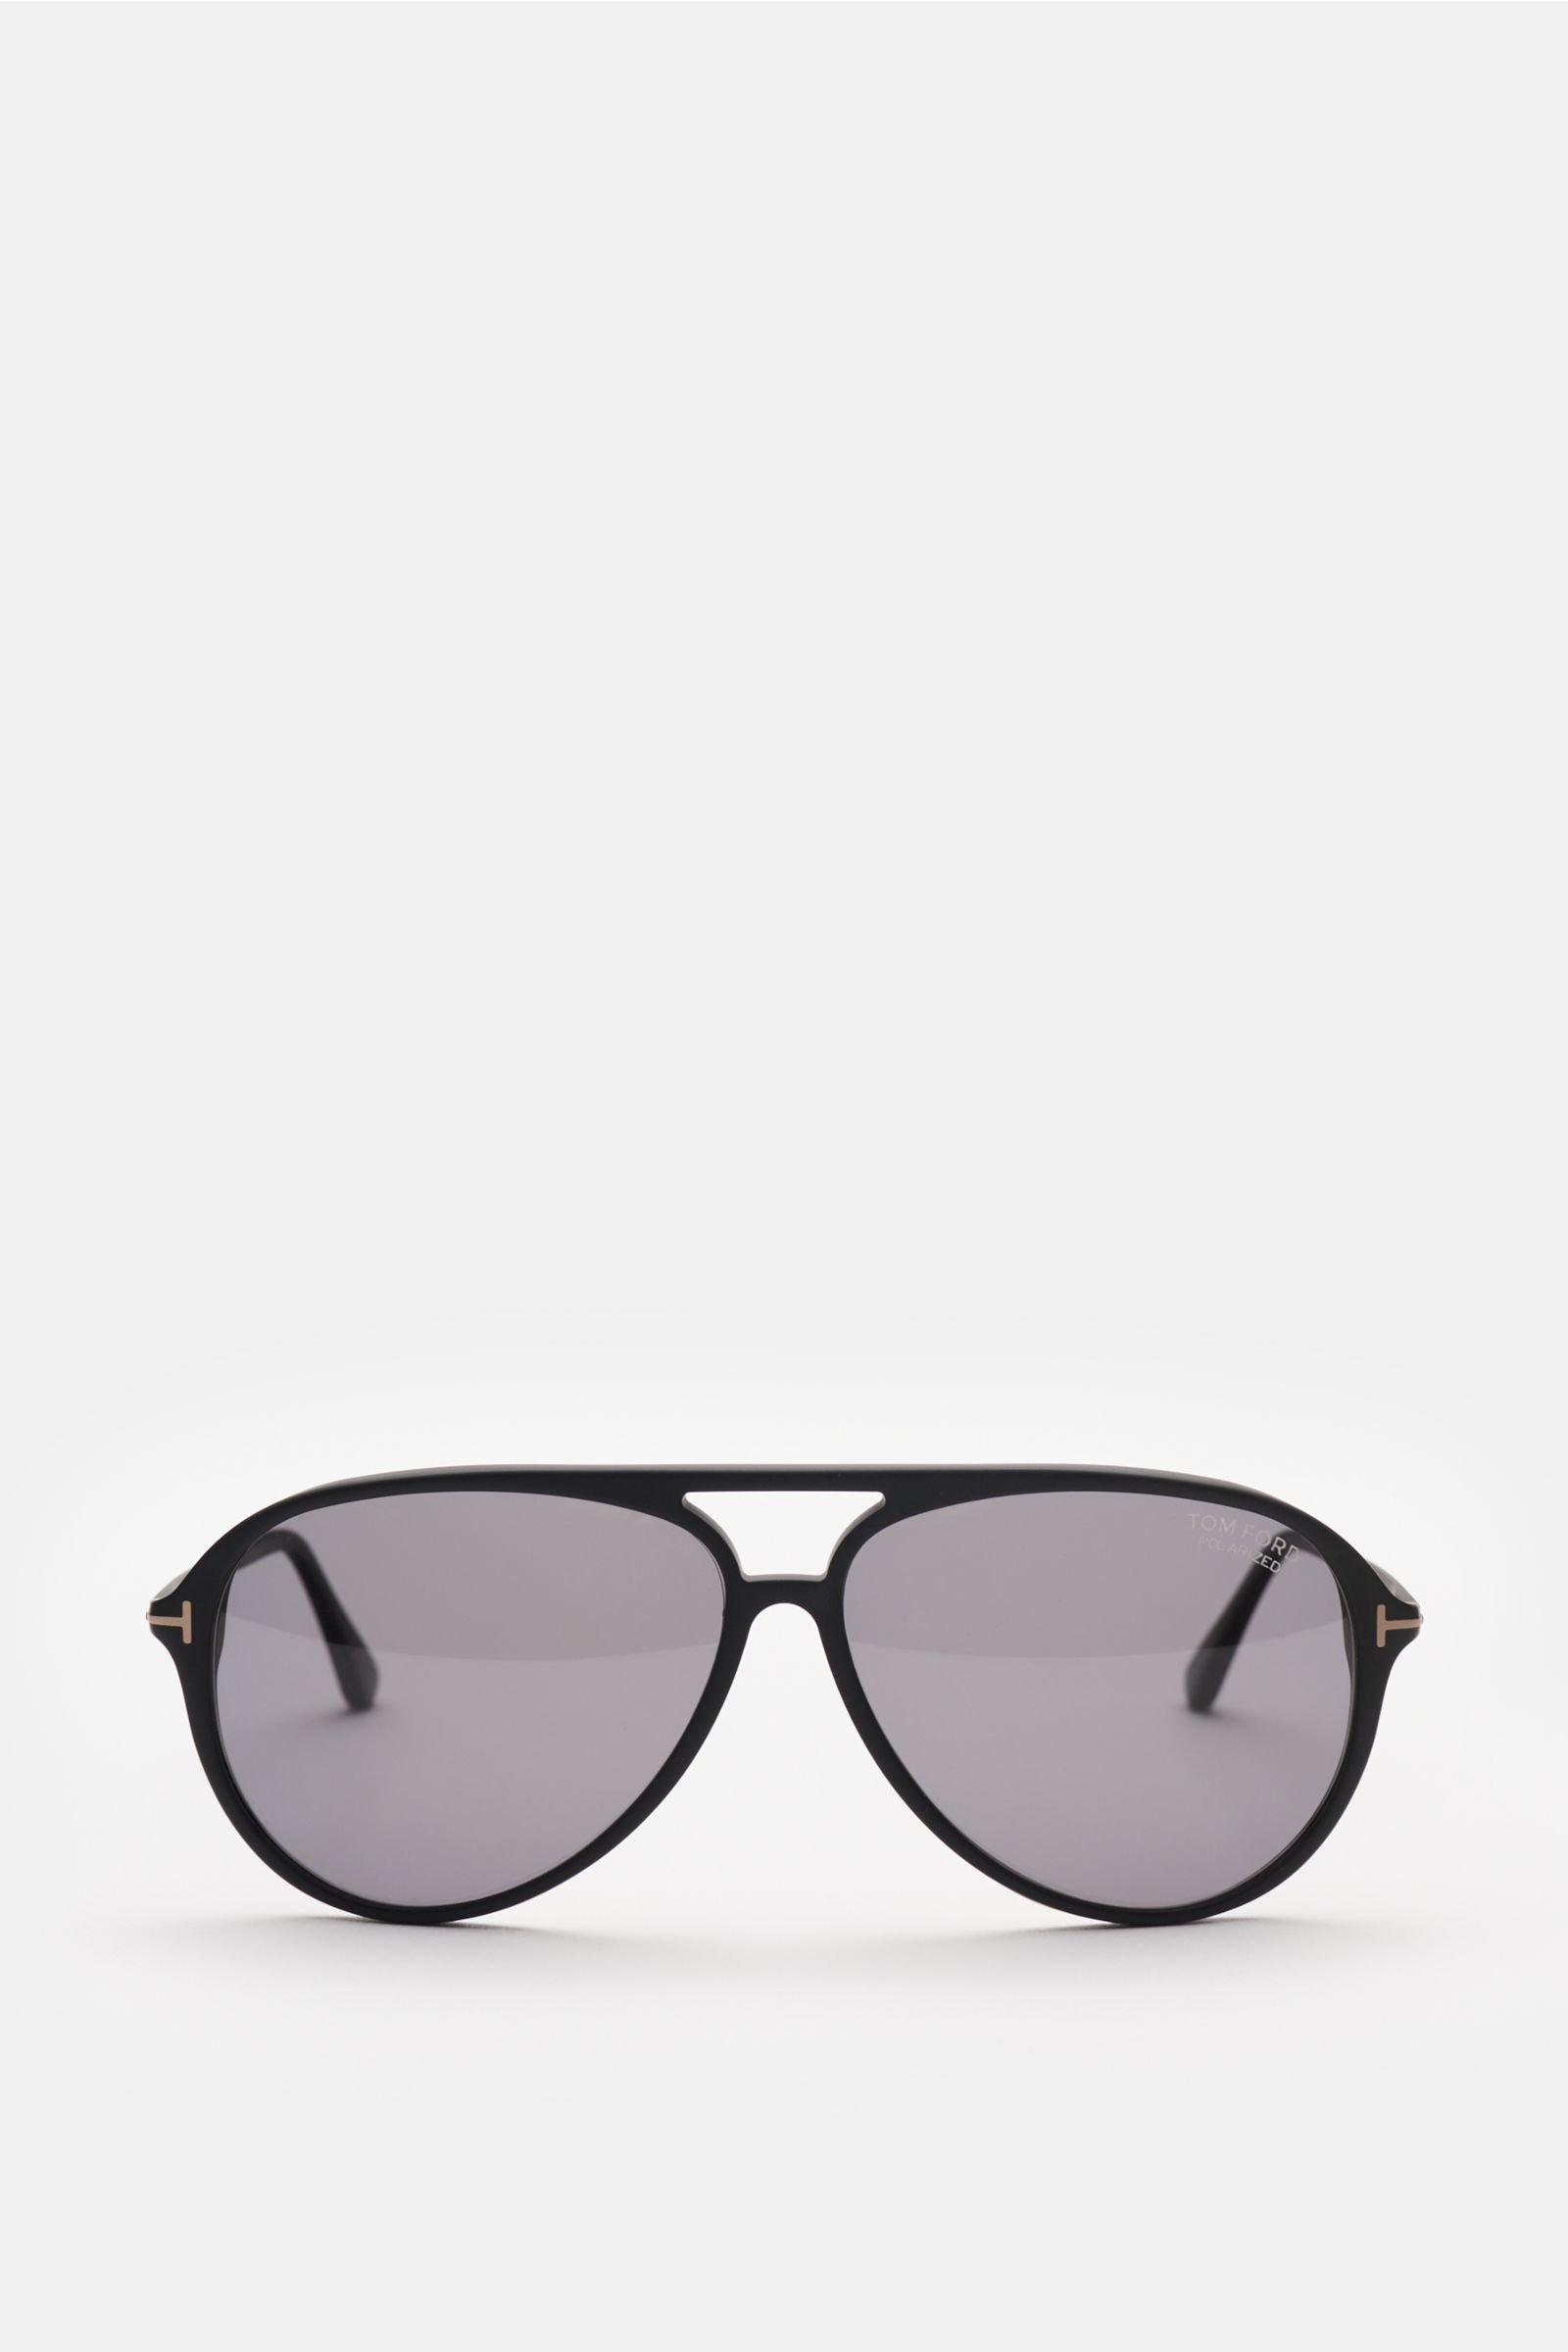 Sunglasses 'Samson' anthracite/dark grey